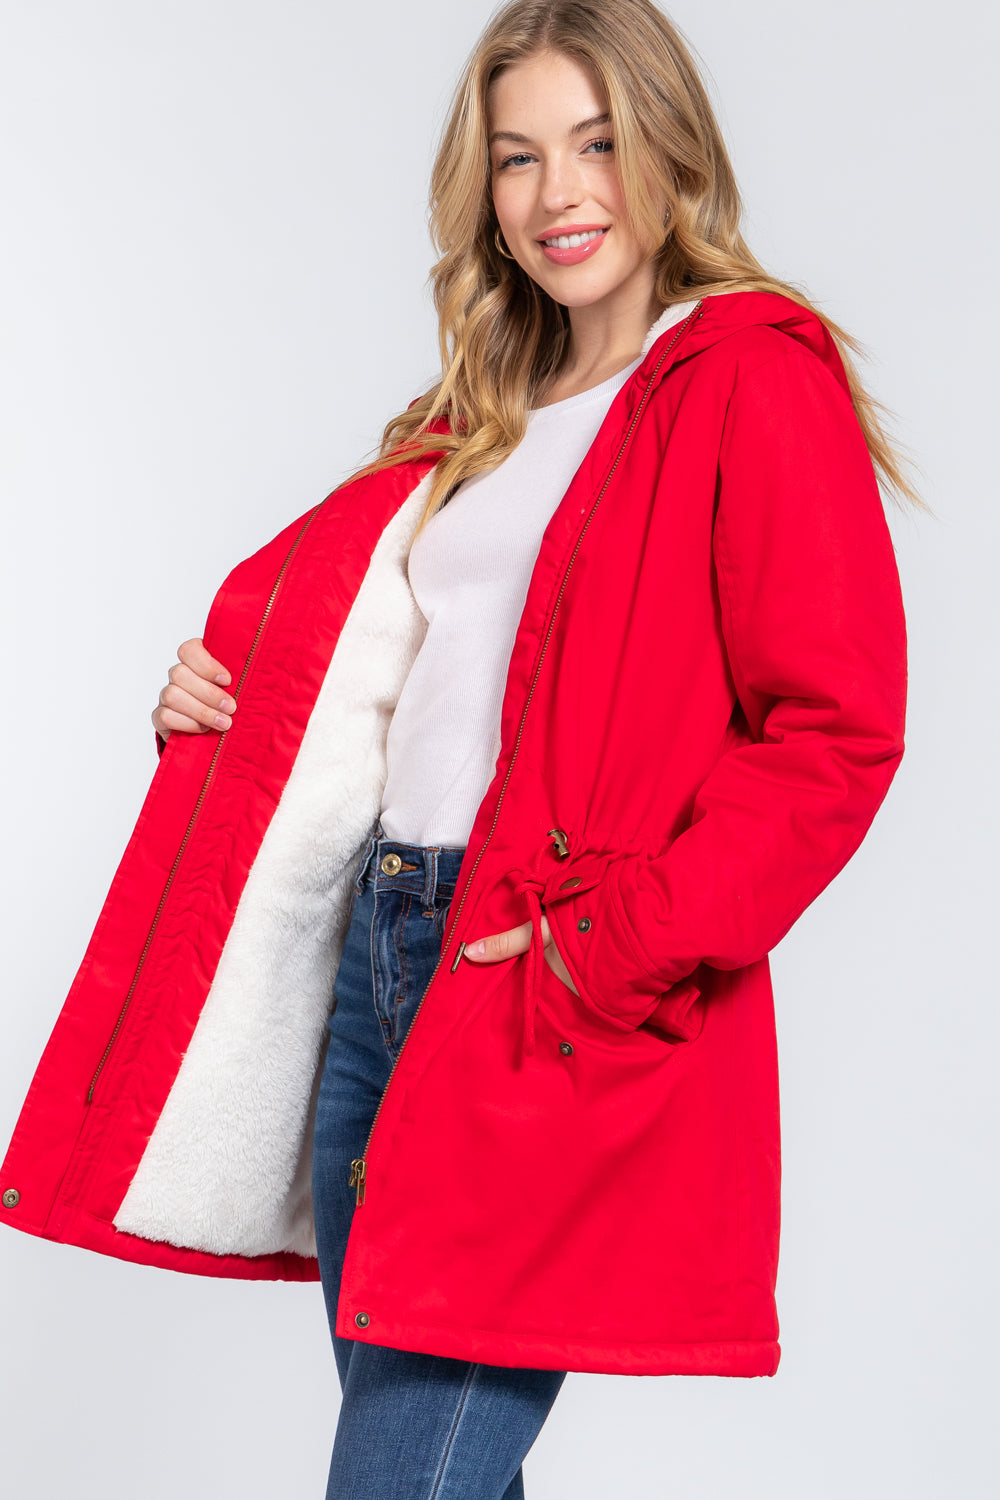 Red Fleece Lined Fur Hoodie Utility Jacket - Tigbuls Variety Fashion